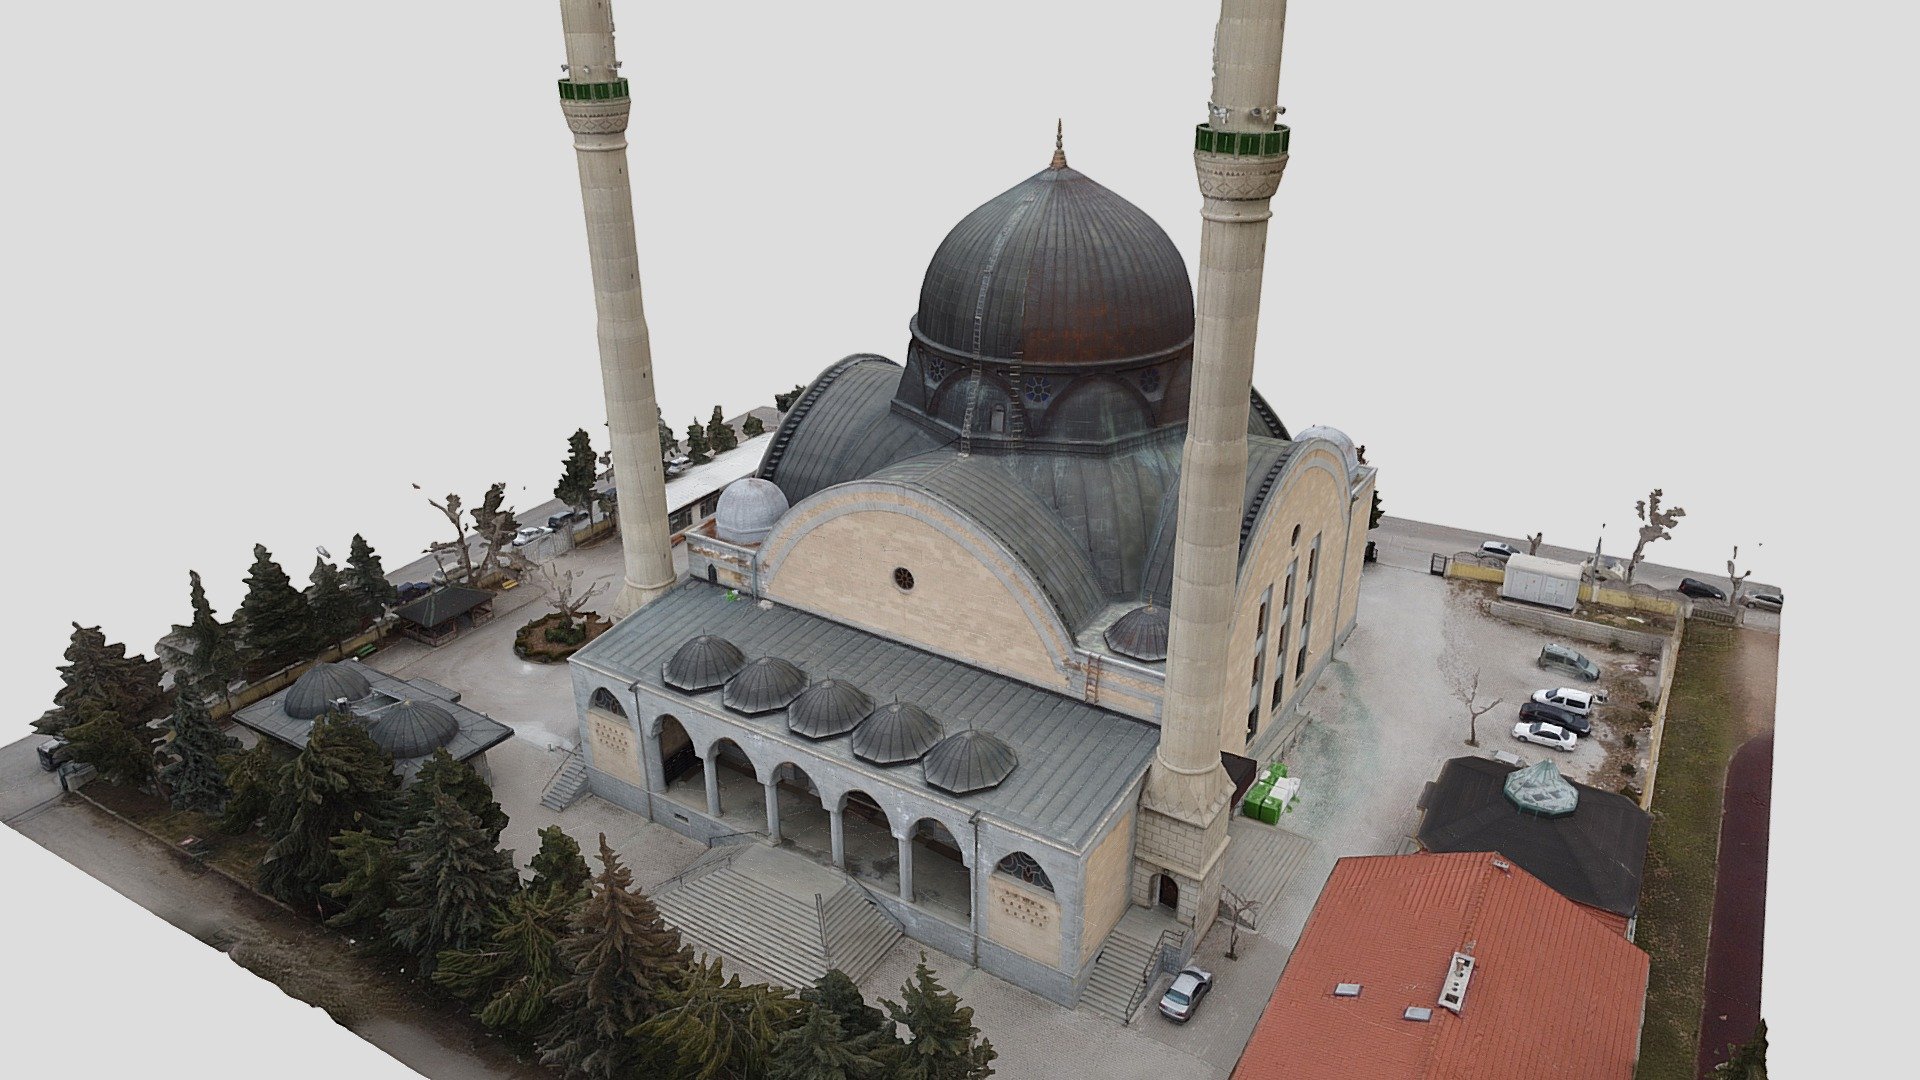 Mosque at the bus station in Isparta, Turkey. This is the biggest mosque in the city of Isparta.

Captured on 31 March 2022 with DJI Mini 2 drone.

Location: https://goo.gl/maps/Lu89xzr6XpbGCybP9

Panorama: https://goo.gl/maps/QsabCB8CmPbNKfVf6

Much more detailed scan available. Contact me if you want to get it.



Isparta, Türkiye'de otogardaki cami. Isparta'nın en büyük camisidir.

31 Mart 2022'de DJI Mini 2 drone ile çekildi.

Konum: https://goo.gl/maps/Lu89xzr6XpbGCybP9

Panorama: https://goo.gl/maps/QsabCB8CmPbNKfVf6

Çok daha detaylı tarama mevcut. Almak isterseniz benimle iletişime geçin.



Мечеть у автовокзала в Ыспарте, Турция. Это самая большая мечеть города.

Снято 31 марта 2022 на квадрокоптер DJI Mini 2.

Местоположение: https://goo.gl/maps/Lu89xzr6XpbGCybP9

Панорама: https://goo.gl/maps/QsabCB8CmPbNKfVf6

Есть намного более детальный скан. Напишите мне, если хотите получить его 3d model